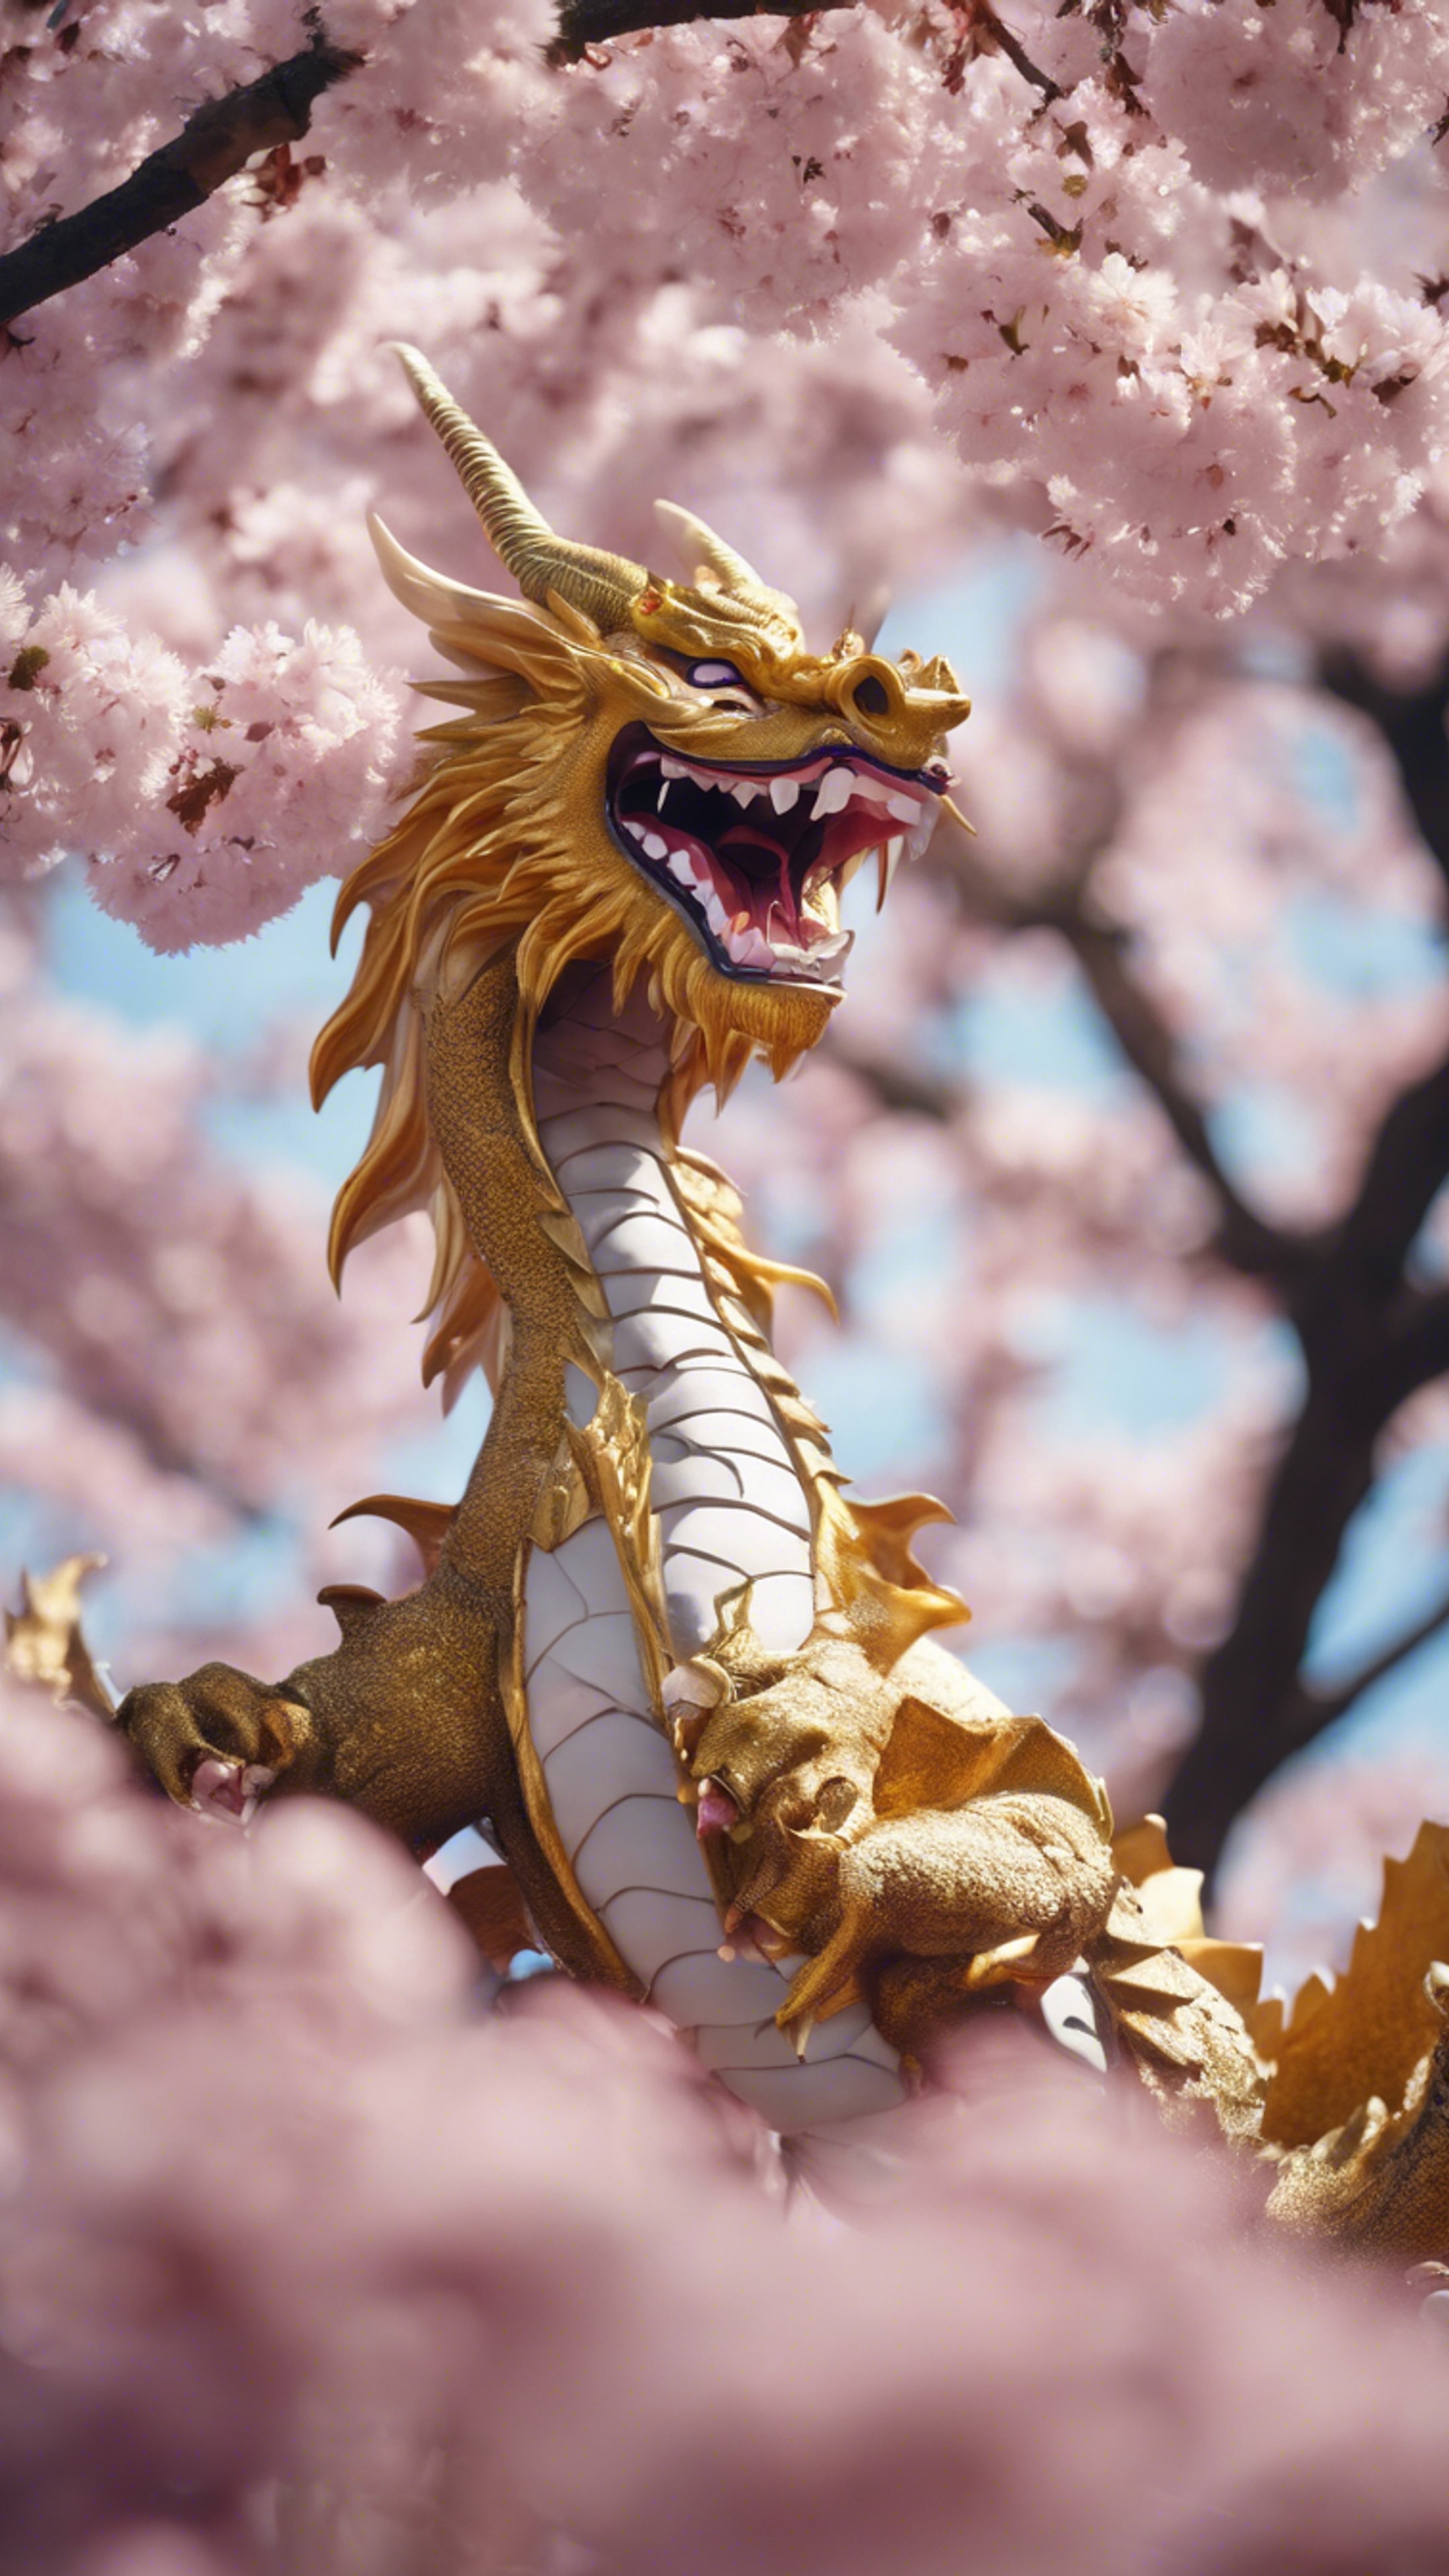 A playful Japanese dragon frolicking in the cherry blossom festival. Sfondo[dfac1438ceb04769bc5b]